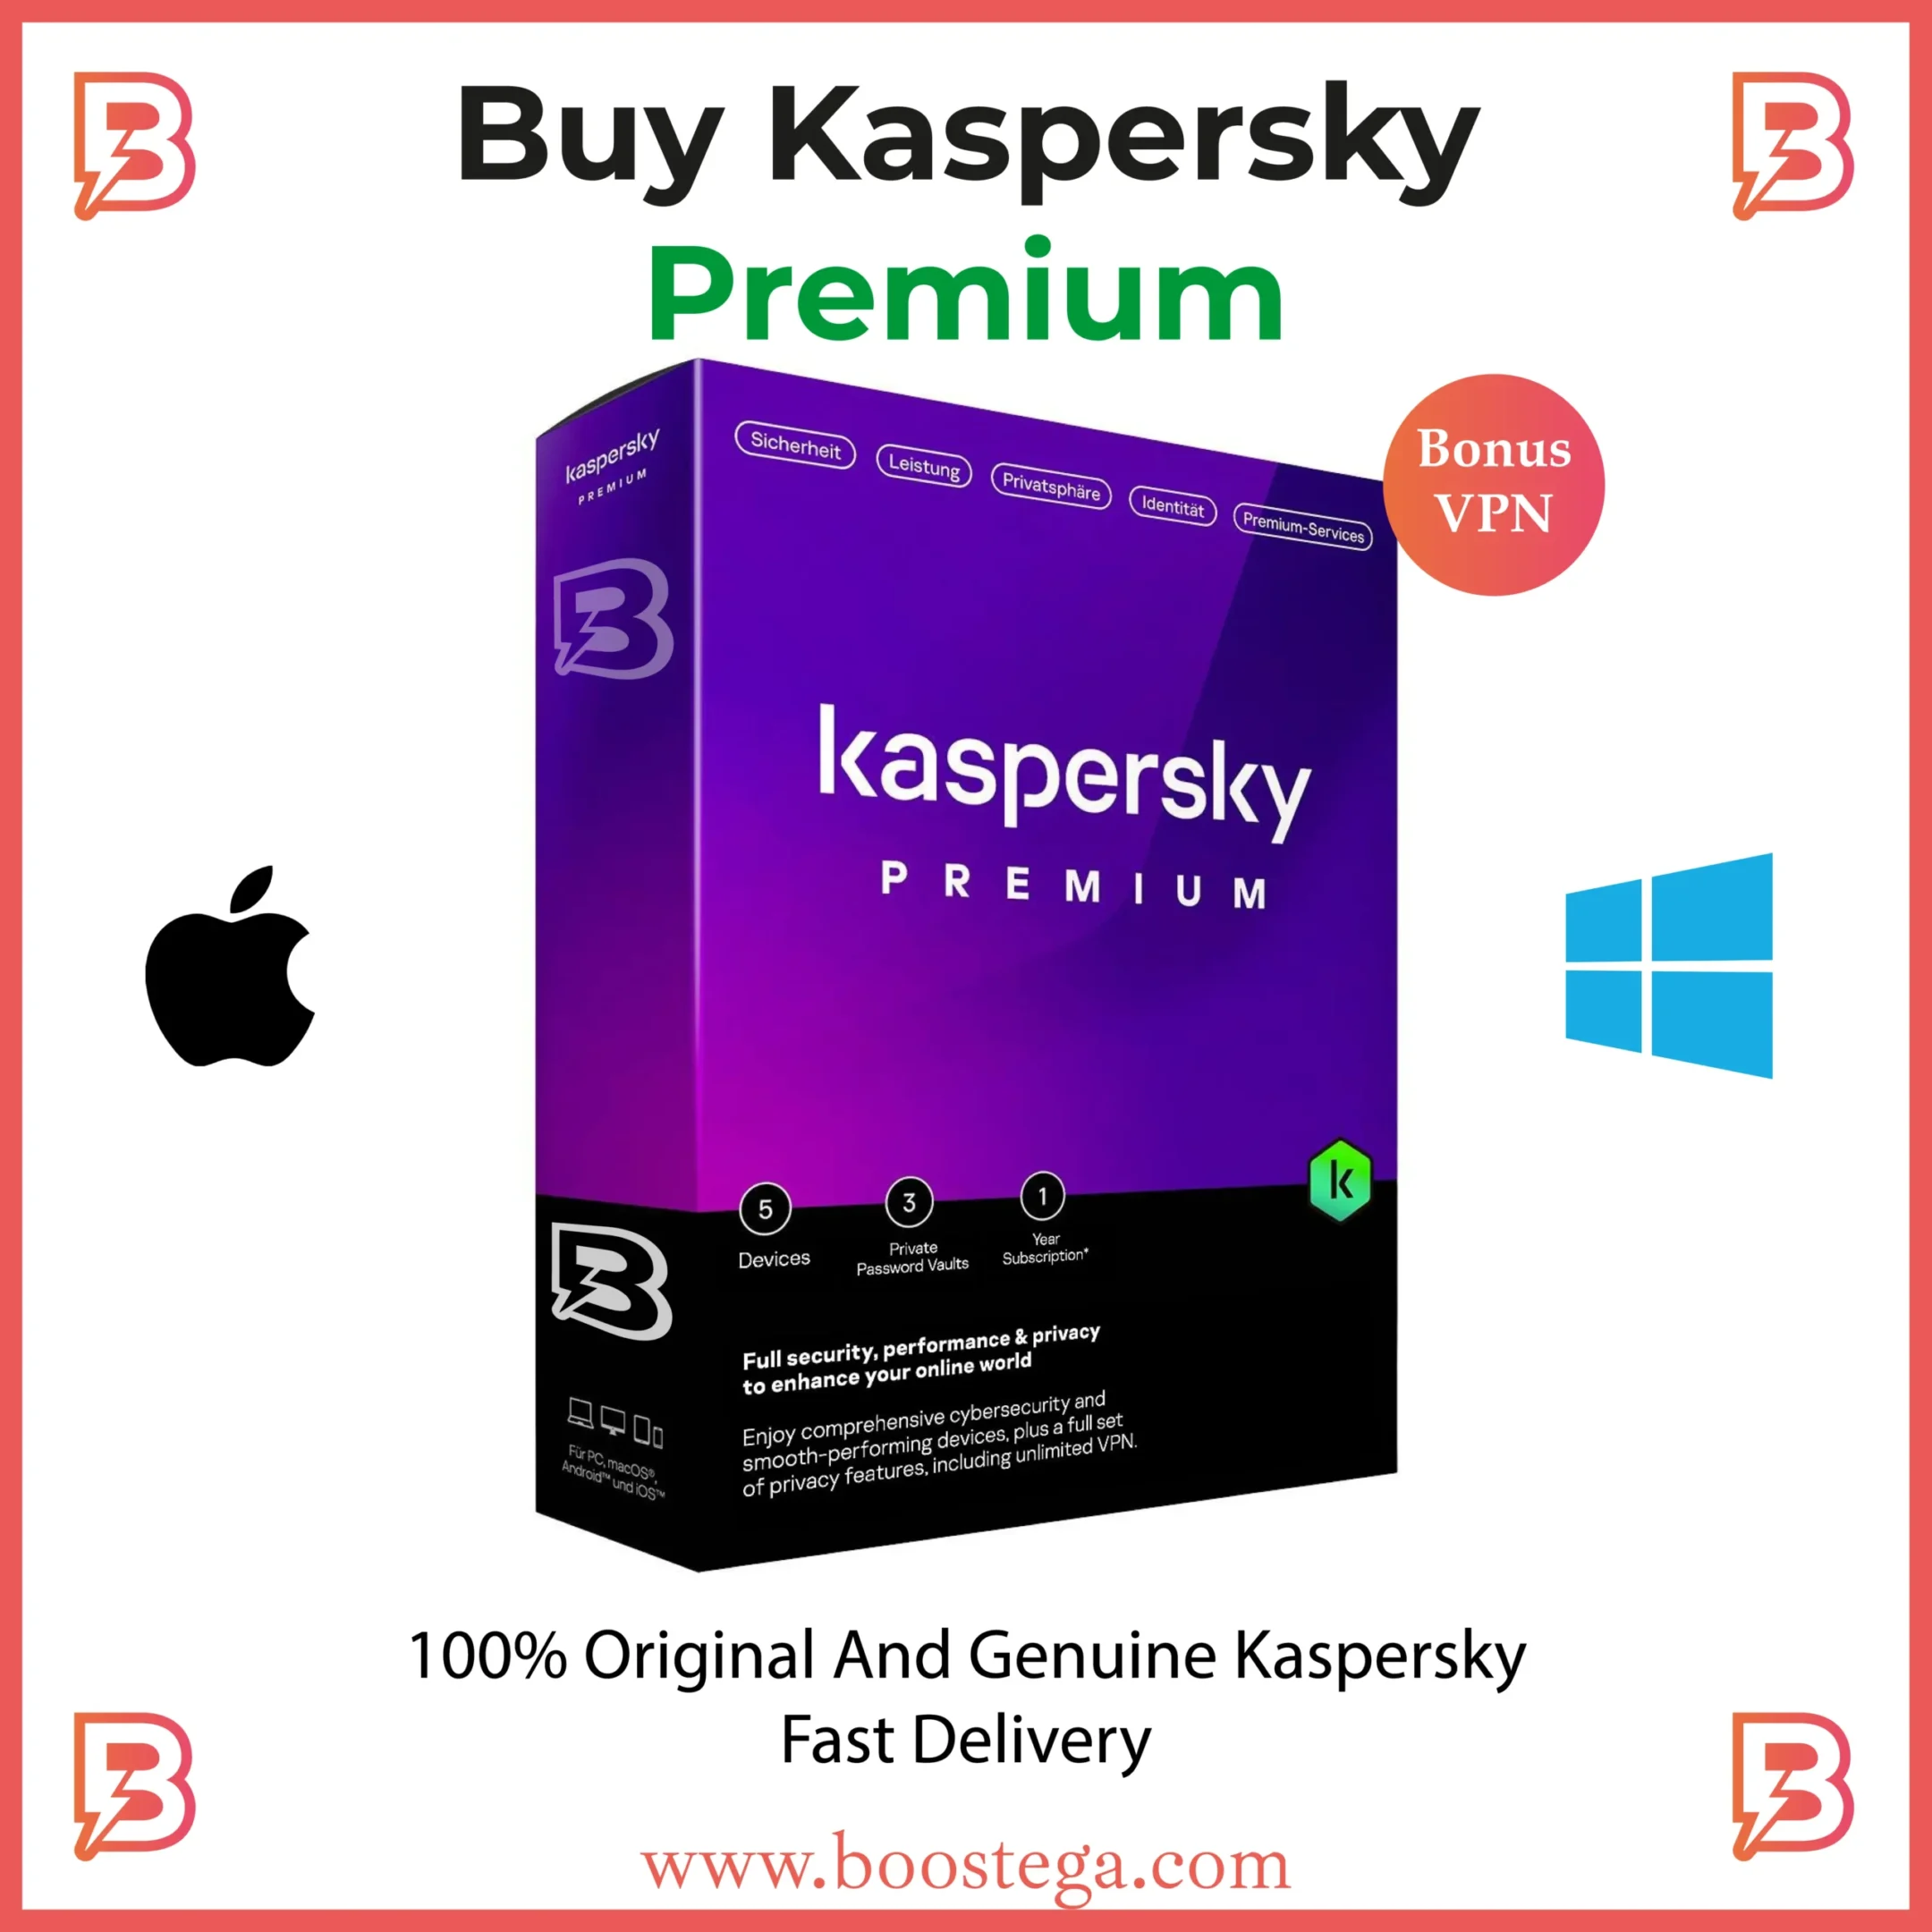 kaspersky premium